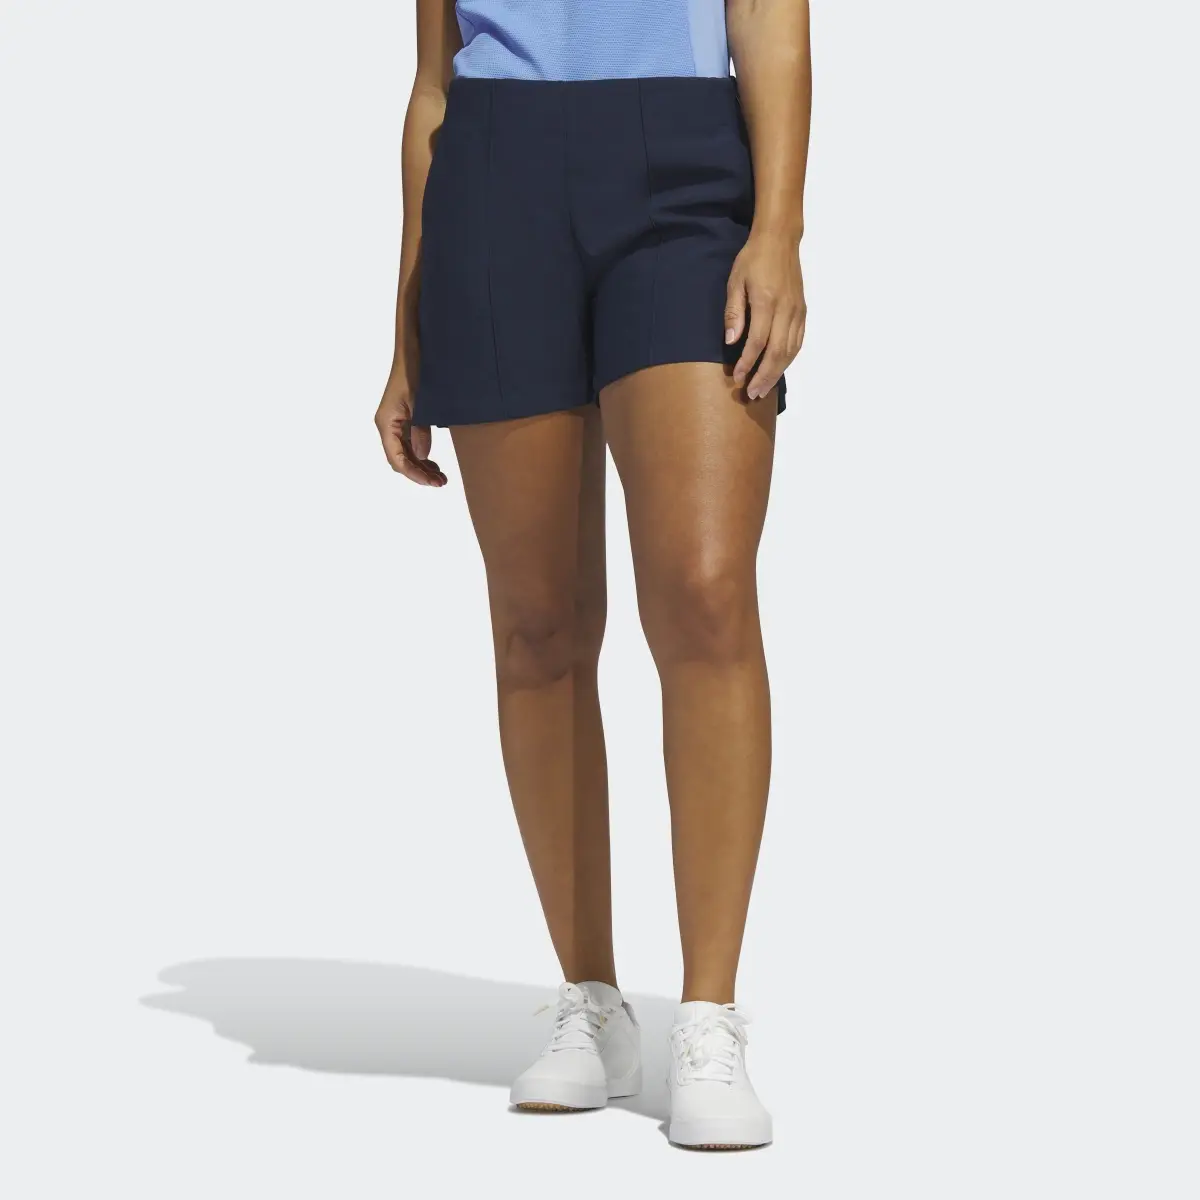 Adidas Pintuck 5-Inch Pull-On Golf Shorts. 1